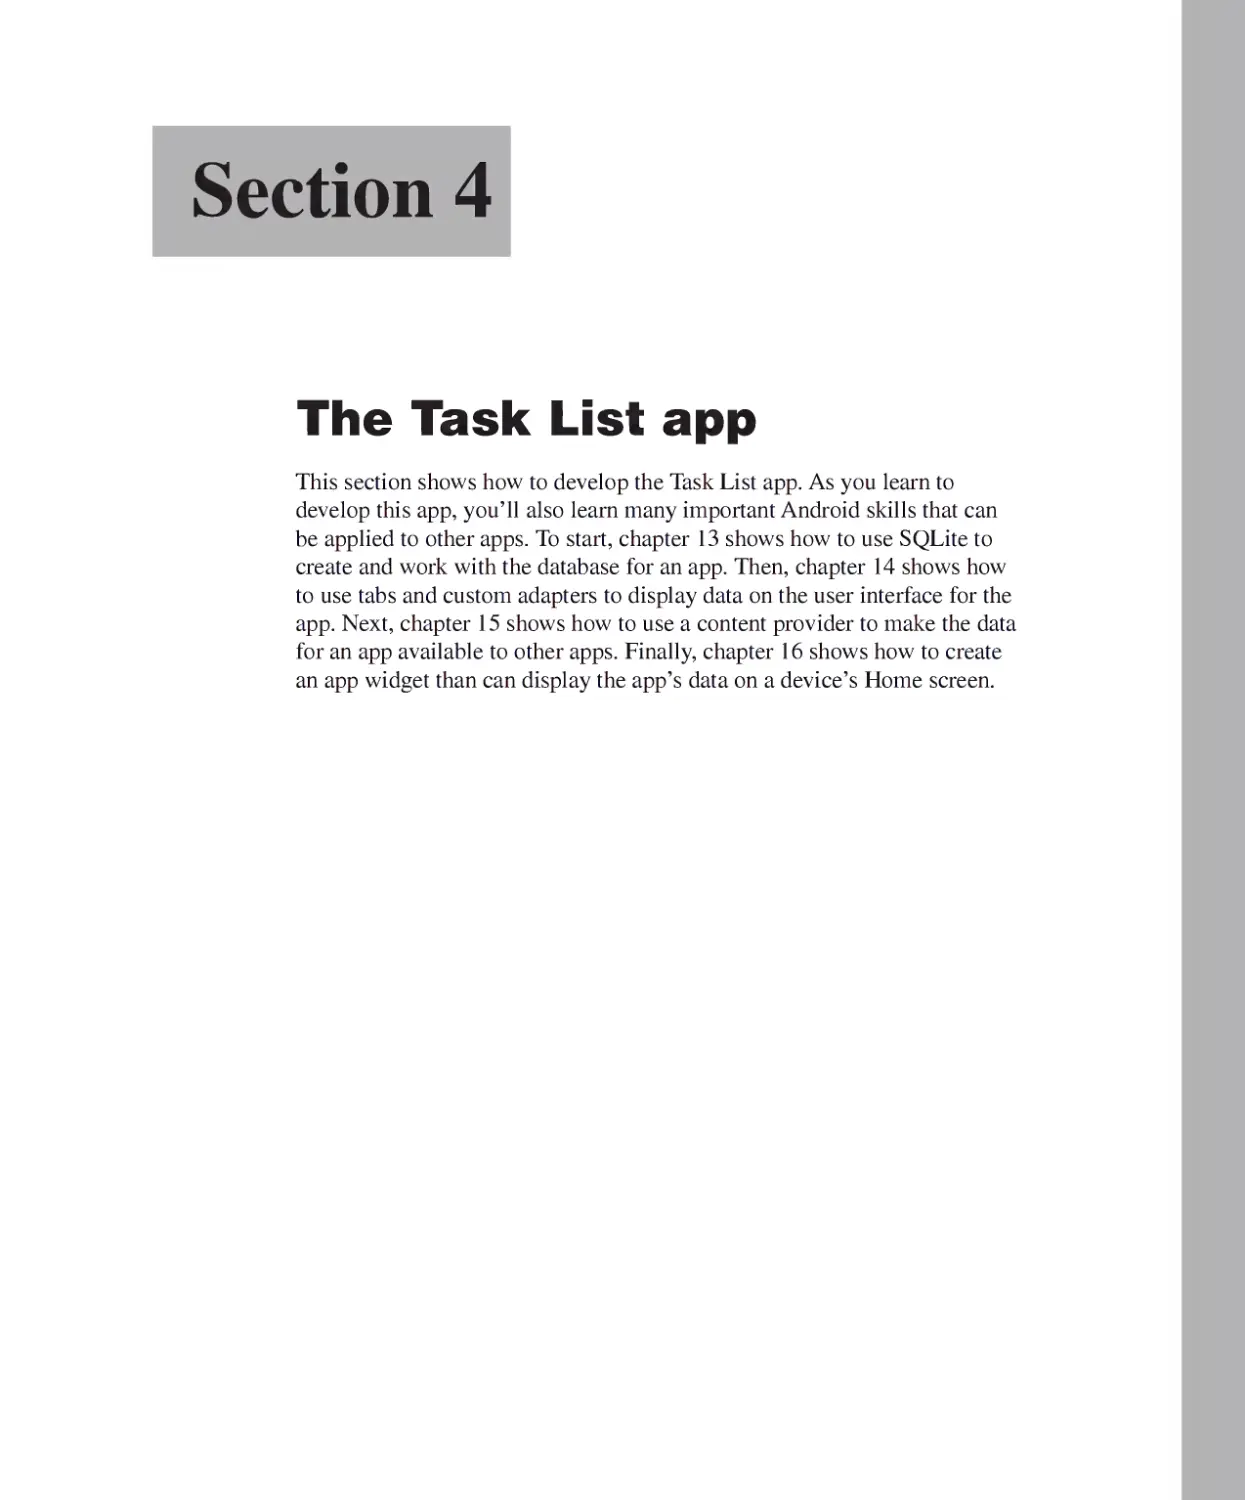 Section 4 - The Task List App